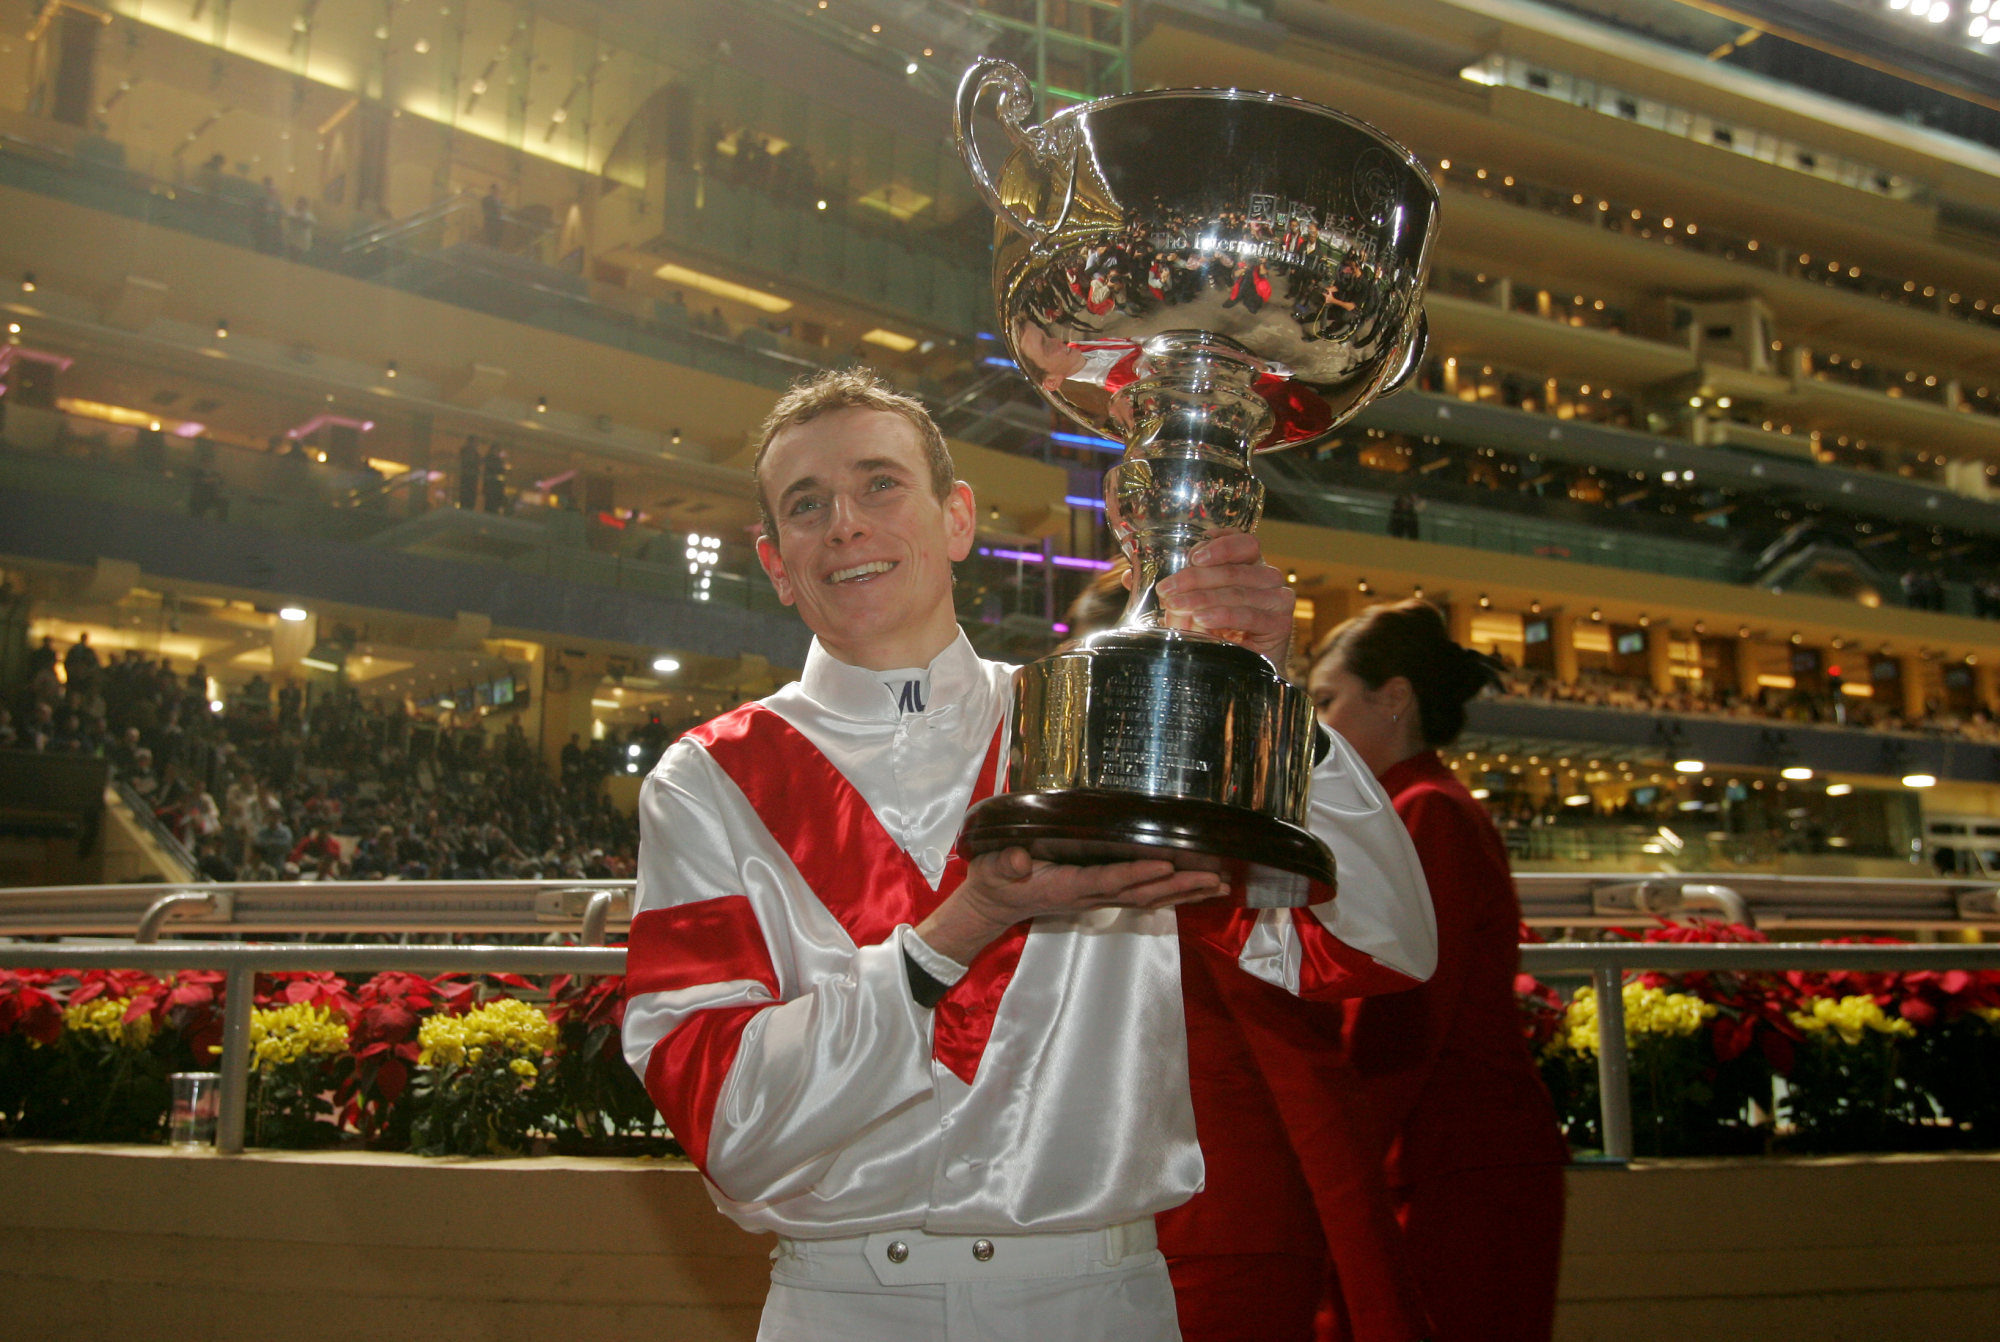 Ryan Moore lifts the 2010 International Jockeys’ Championship silverware.